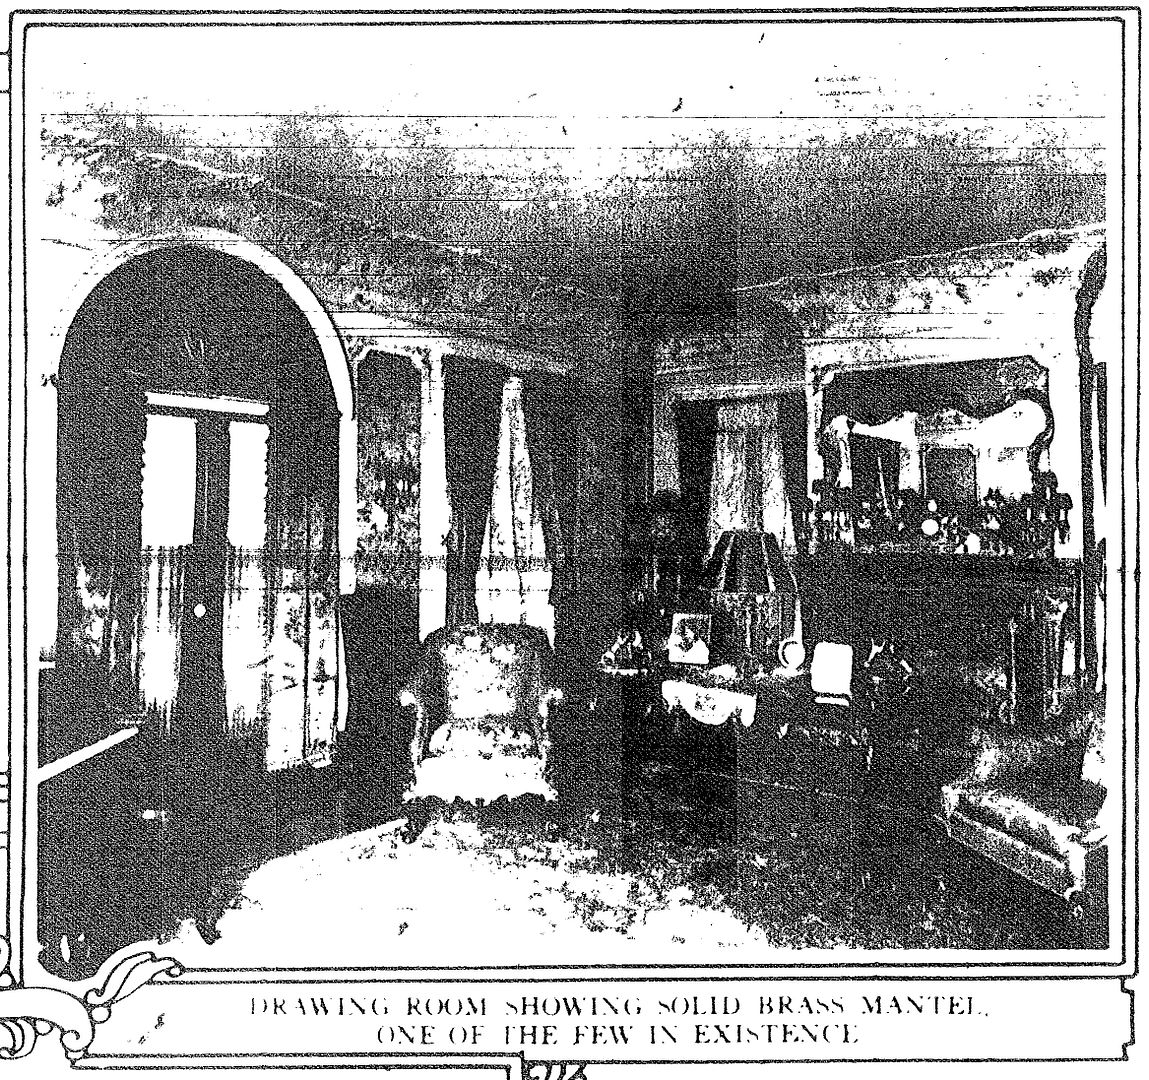 Mr. C. F. Sauers home had a brass fireplace mantel. 